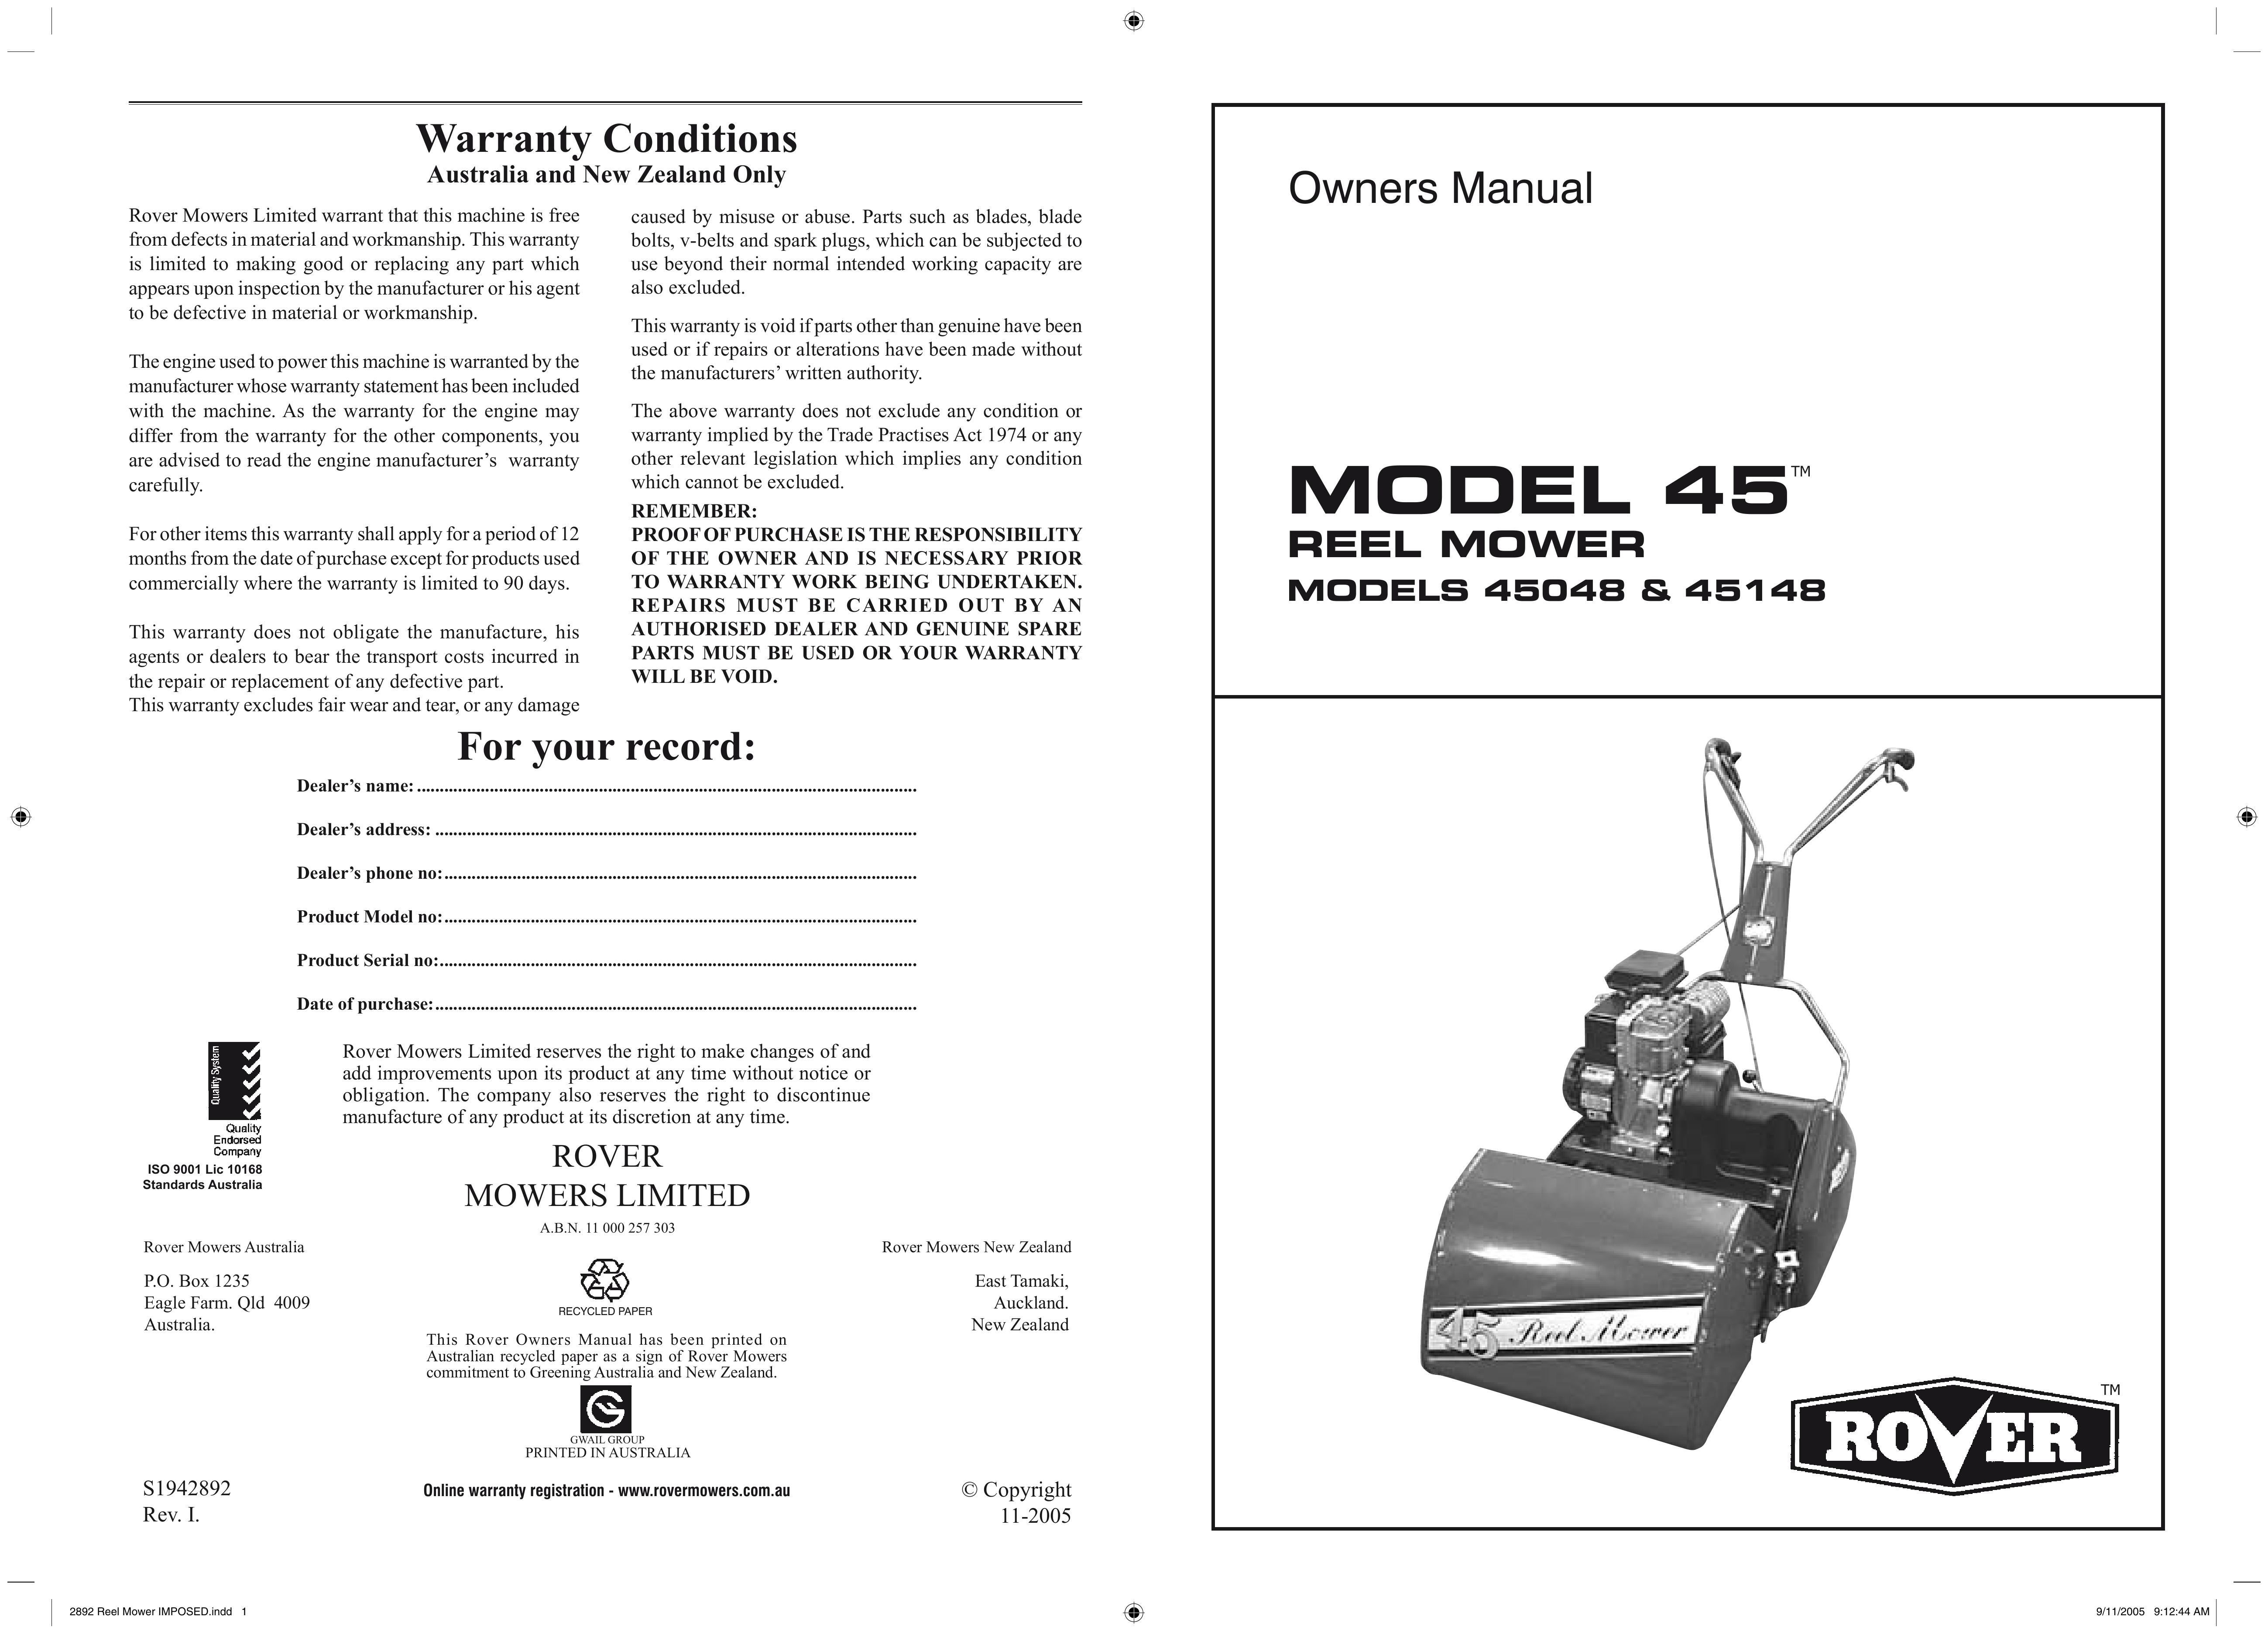 Rover 45048, 45148 Lawn Mower User Manual